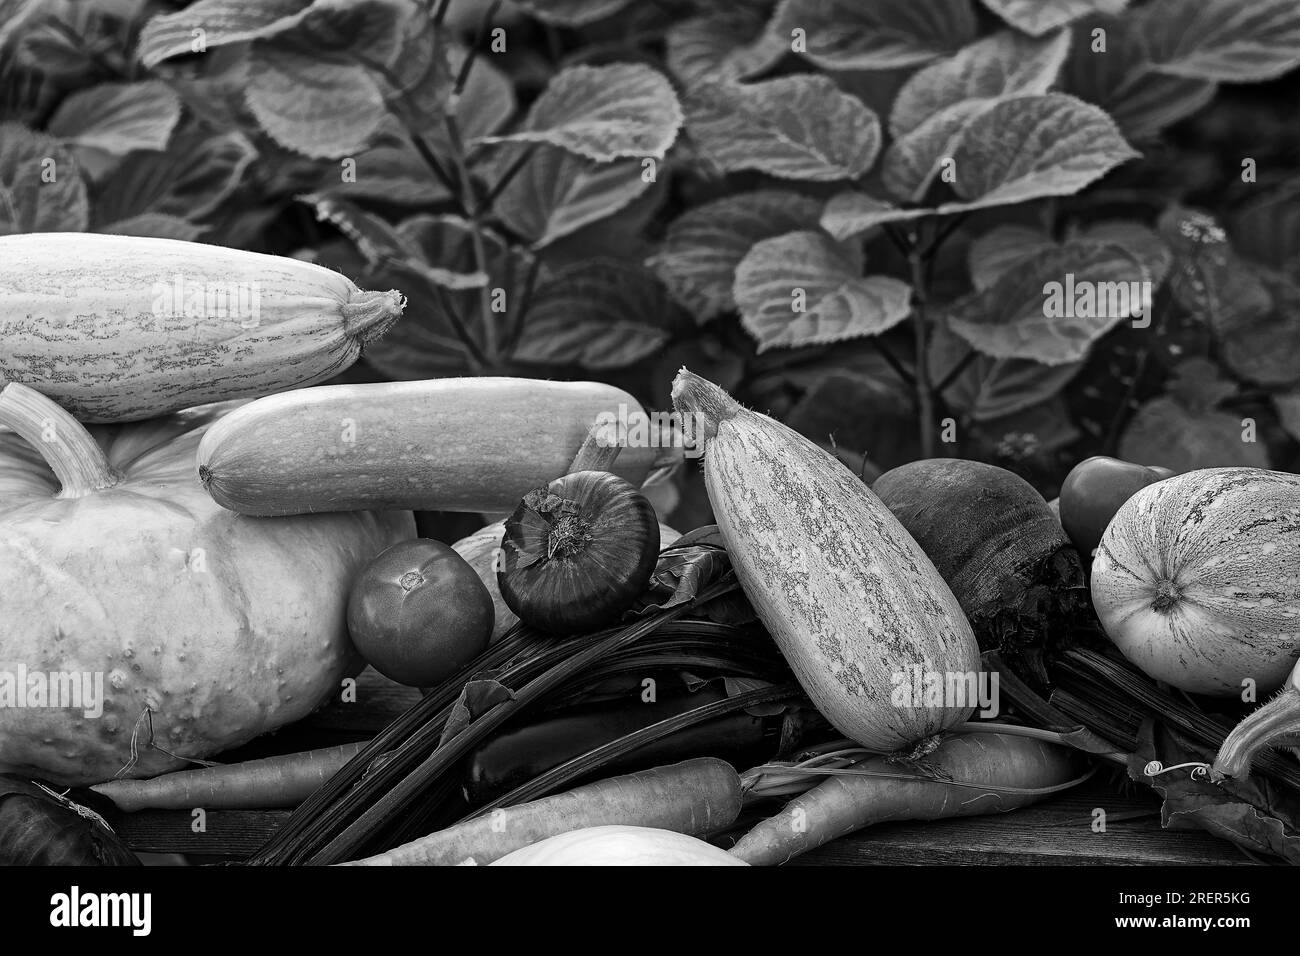 Photo vegetables,squash,pumpkins Stock Photo